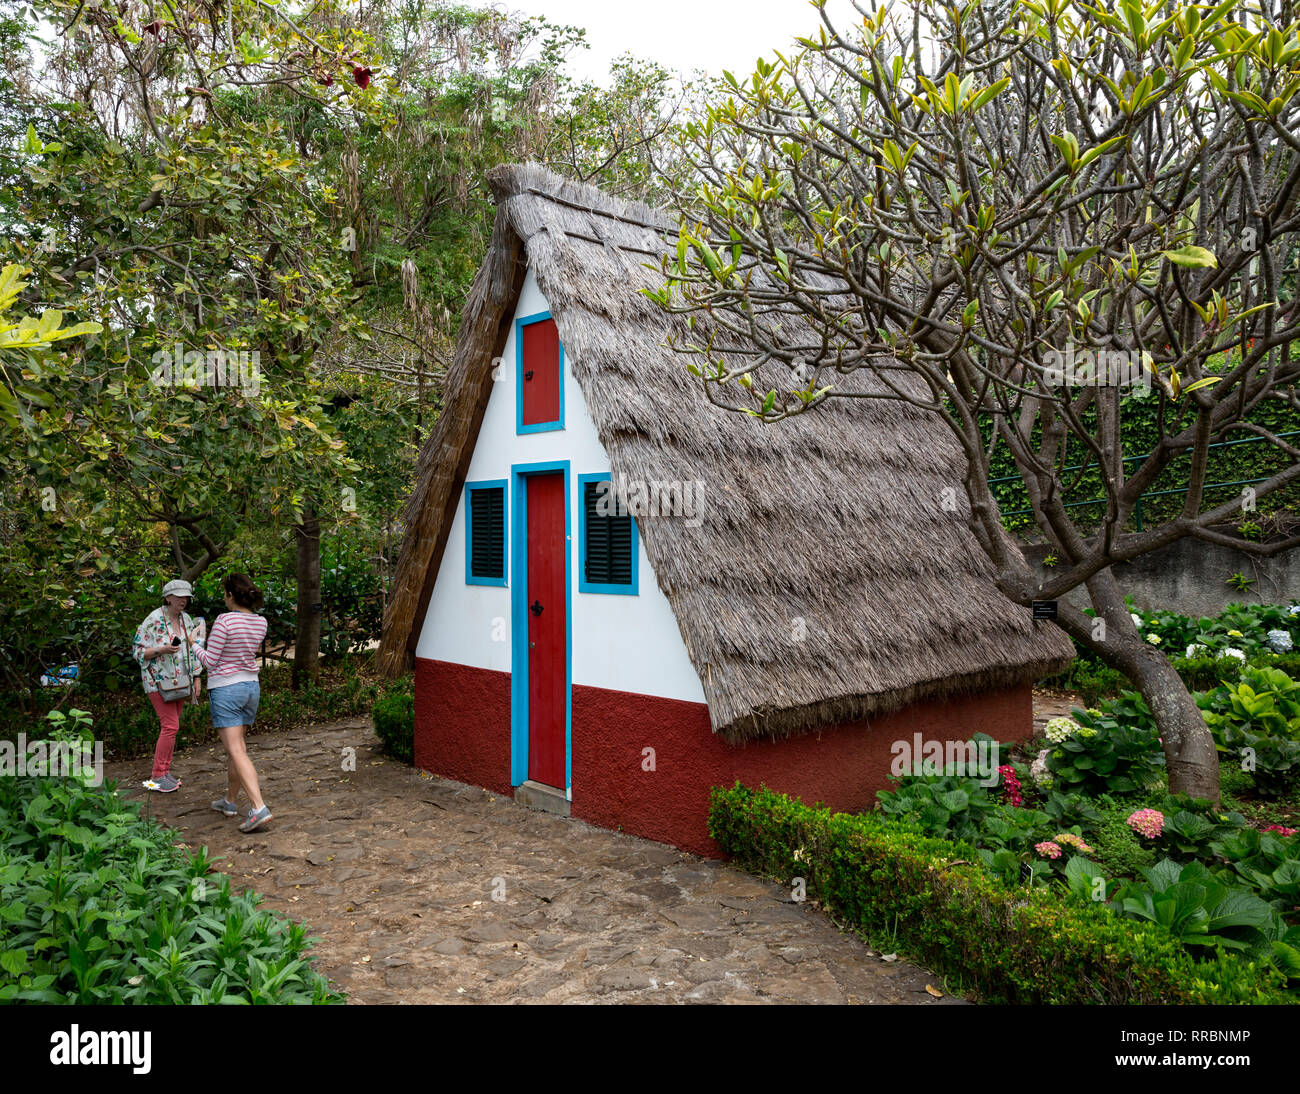 Model of a traditional Maderia thatched house, Botanic Gardens (Jardim Botanico), Funchal, Madeira, Portugal. Stock Photo